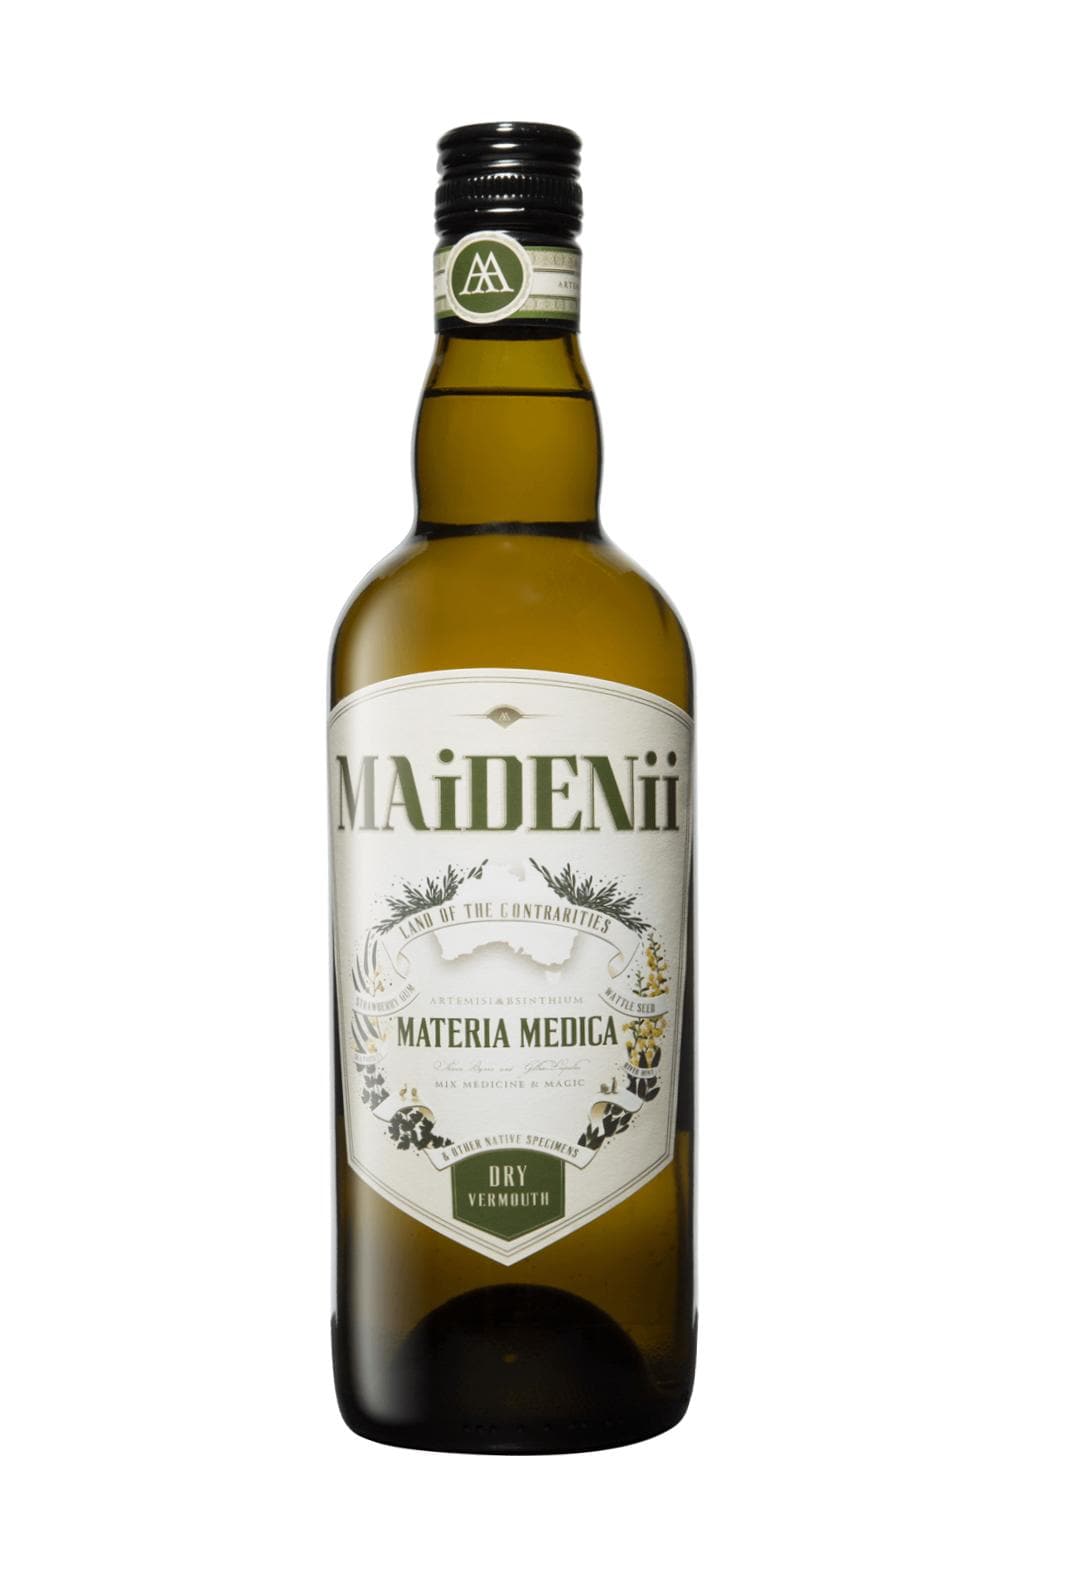 Maidenii Dry Vermouth 750ml 19% | Liquor & Spirits | Shop online at Spirits of France